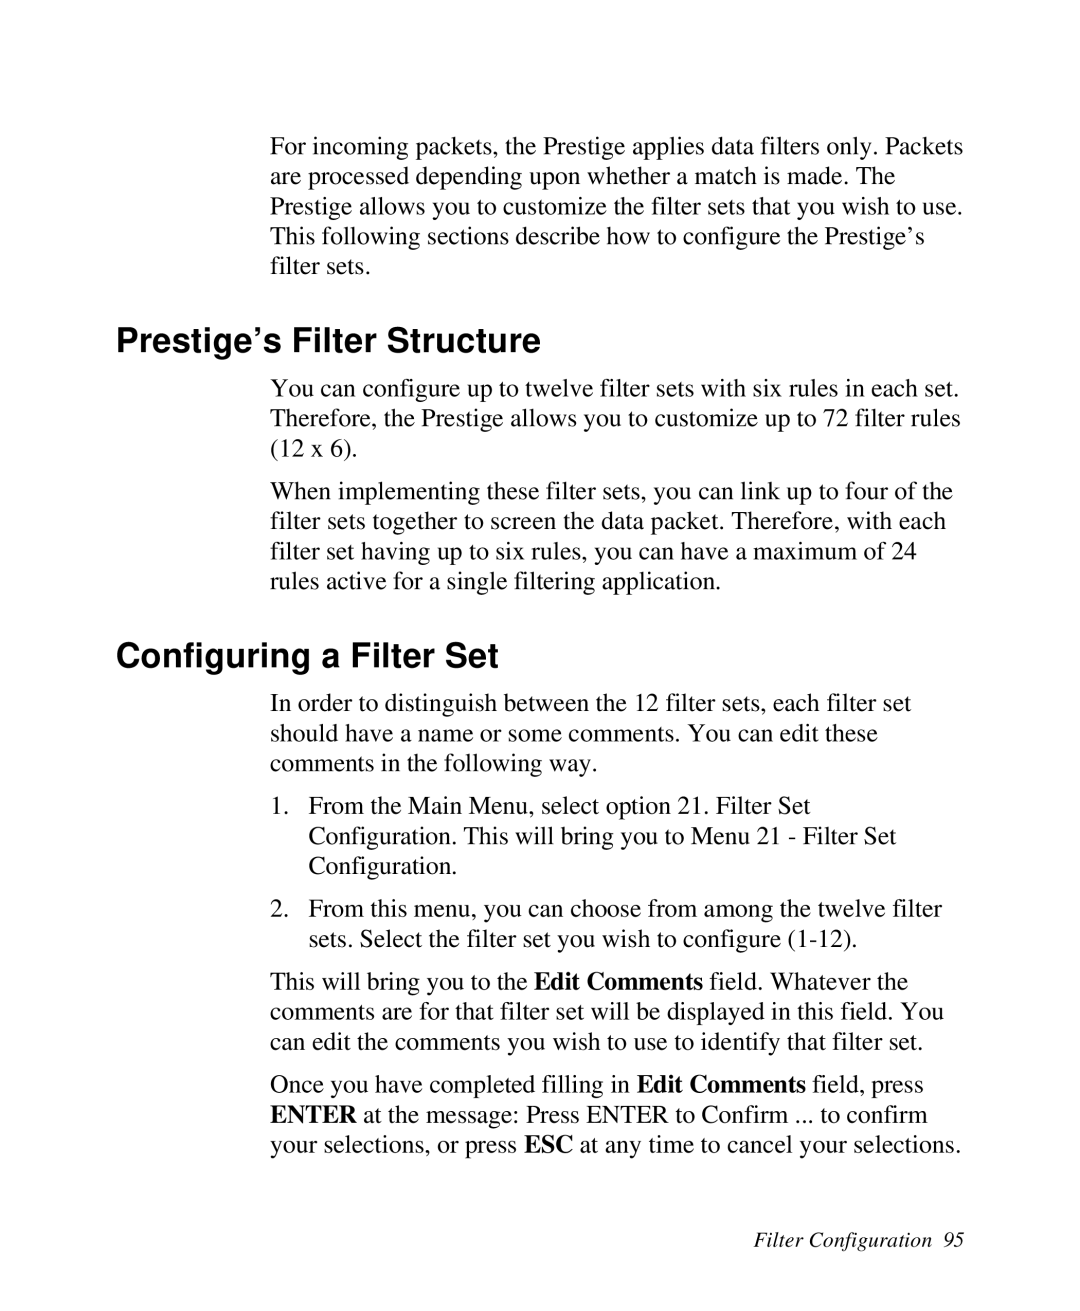 ZyXEL Communications Prestige 128 user manual Prestige’s Filter Structure, Configuring a Filter Set, Filter Configuration 